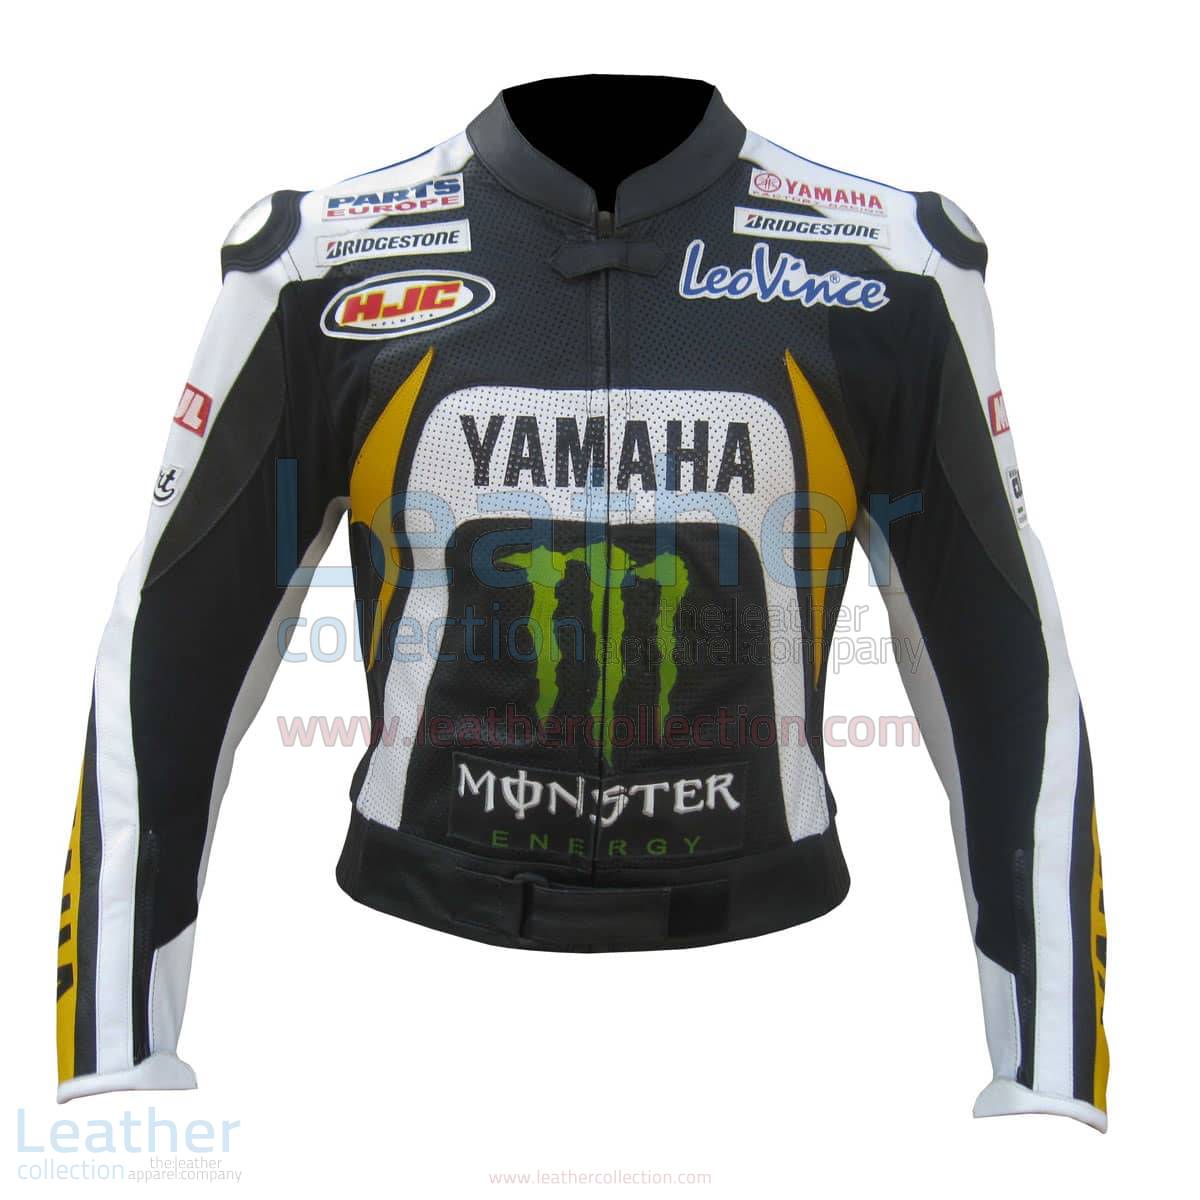 Ben Spies Yamaha Monster 2010 Leather jacket